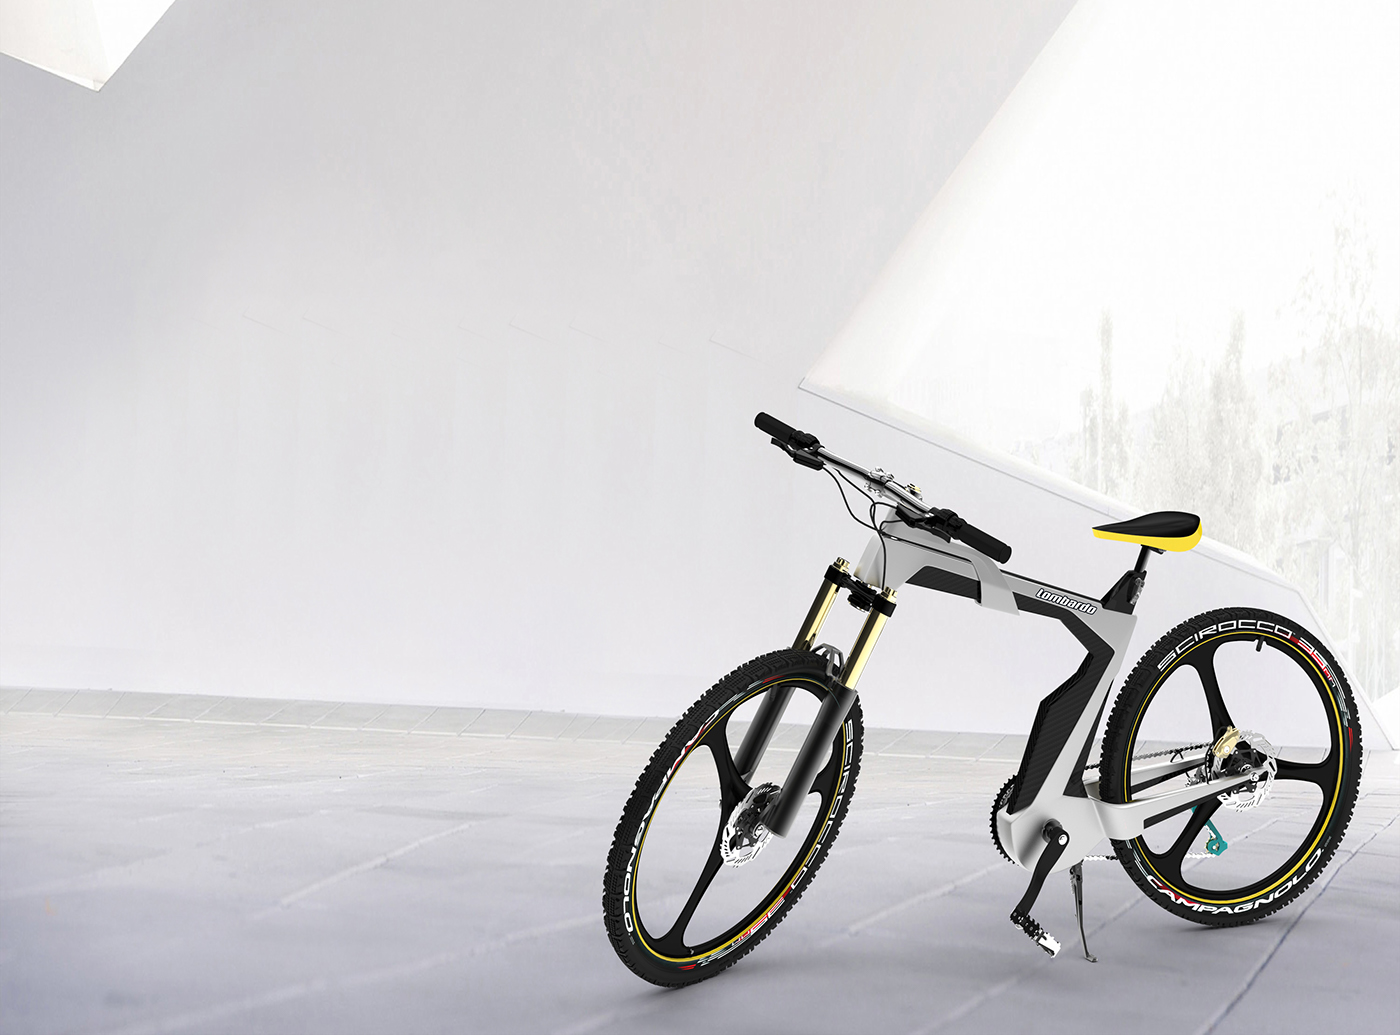 Bike Transport concept electric lombardo marco schembri electric bike E-Bike bike design Futuristic bike